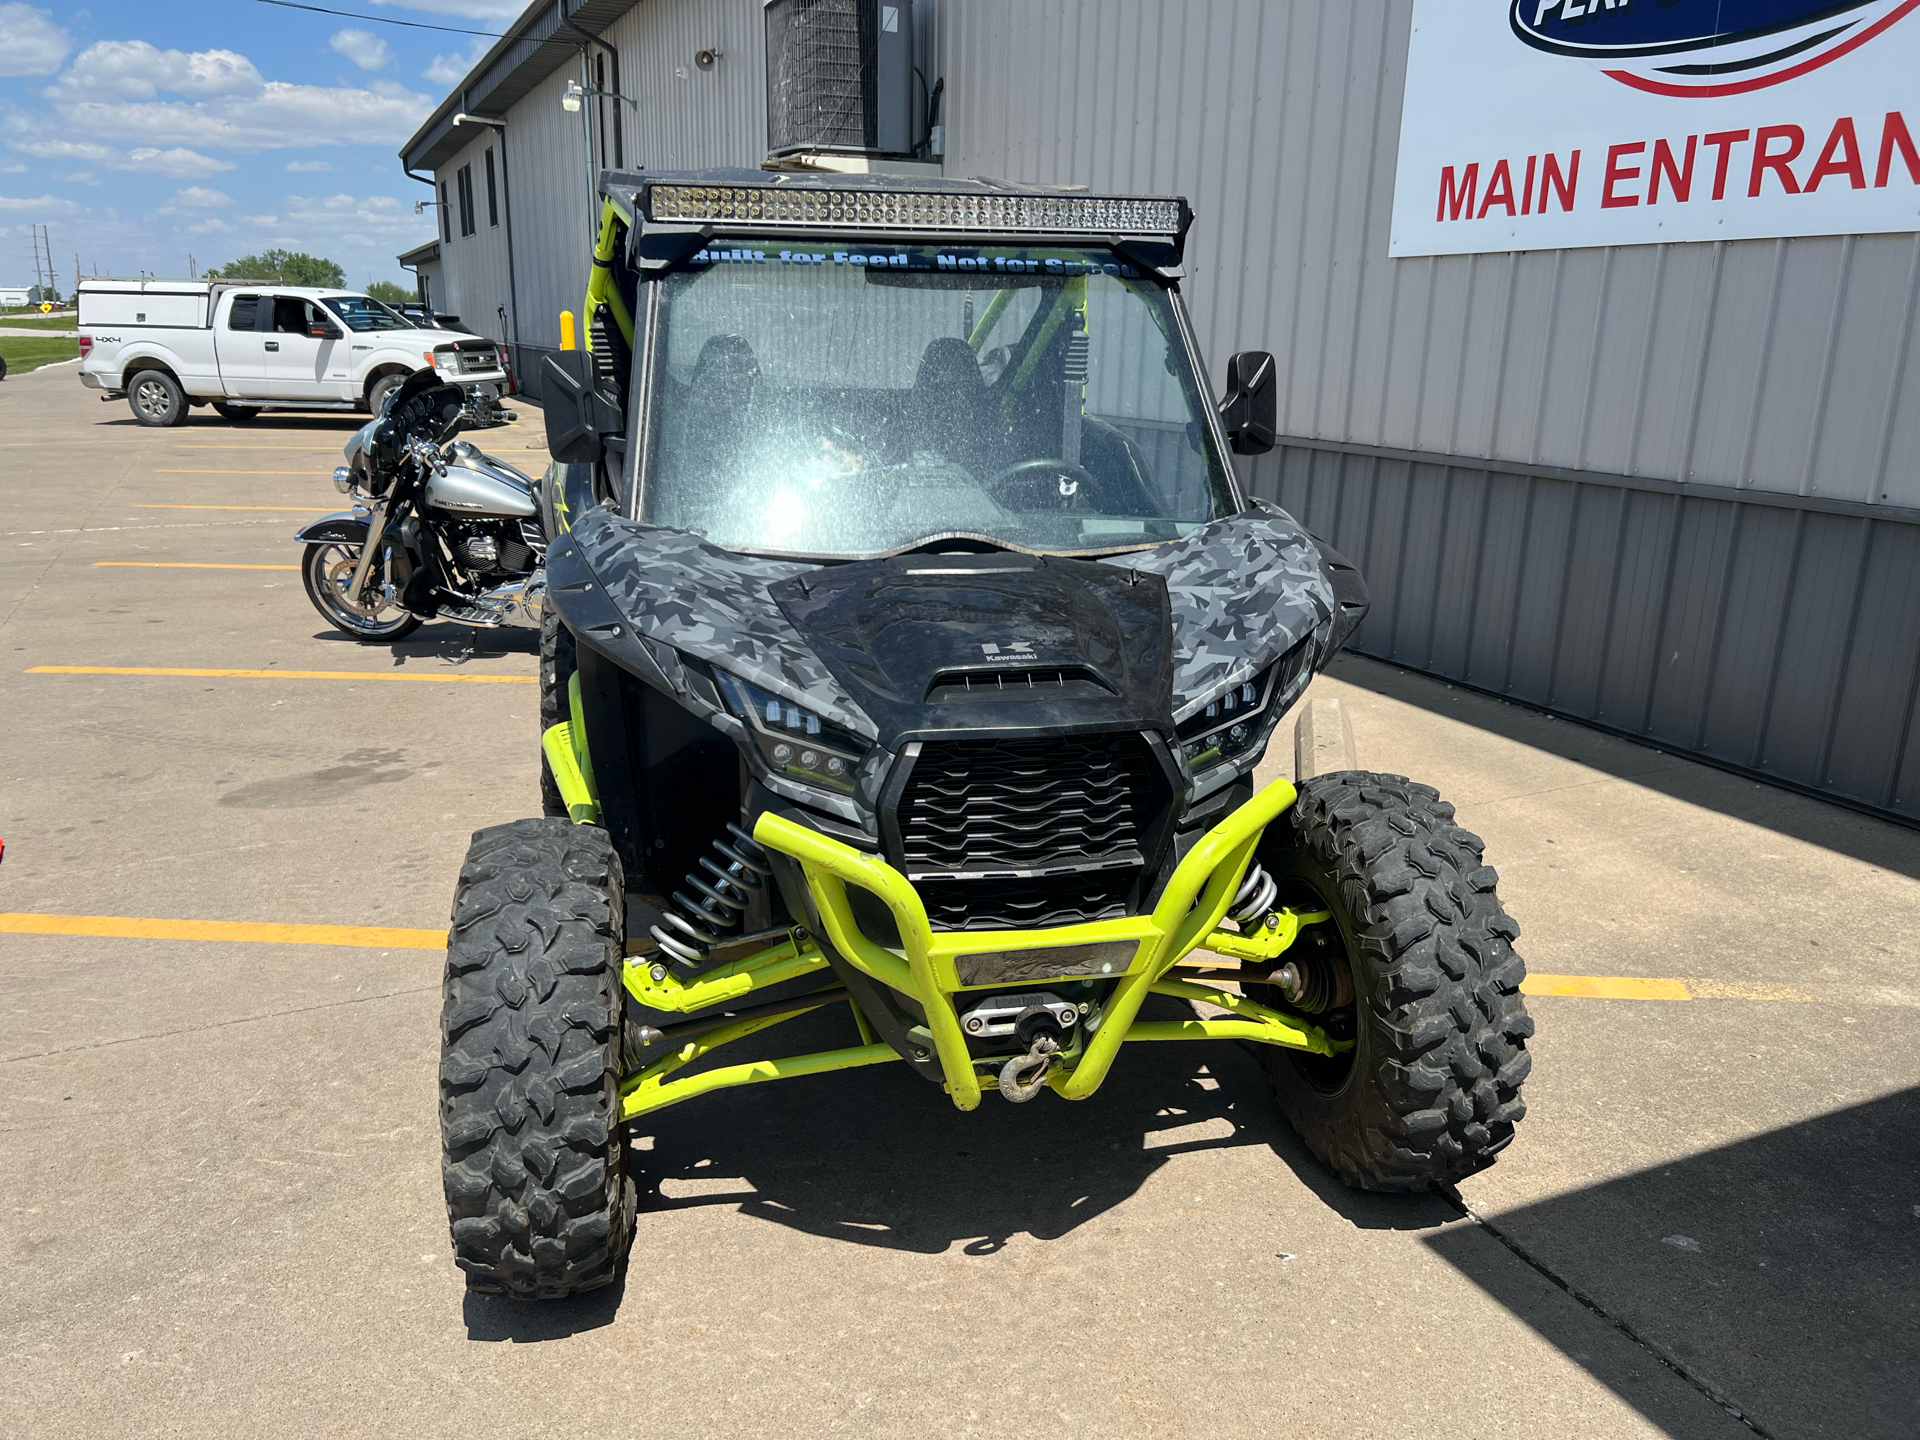 2021 Kawasaki Teryx KRX 1000 Trail Edition in Ottumwa, Iowa - Photo 4